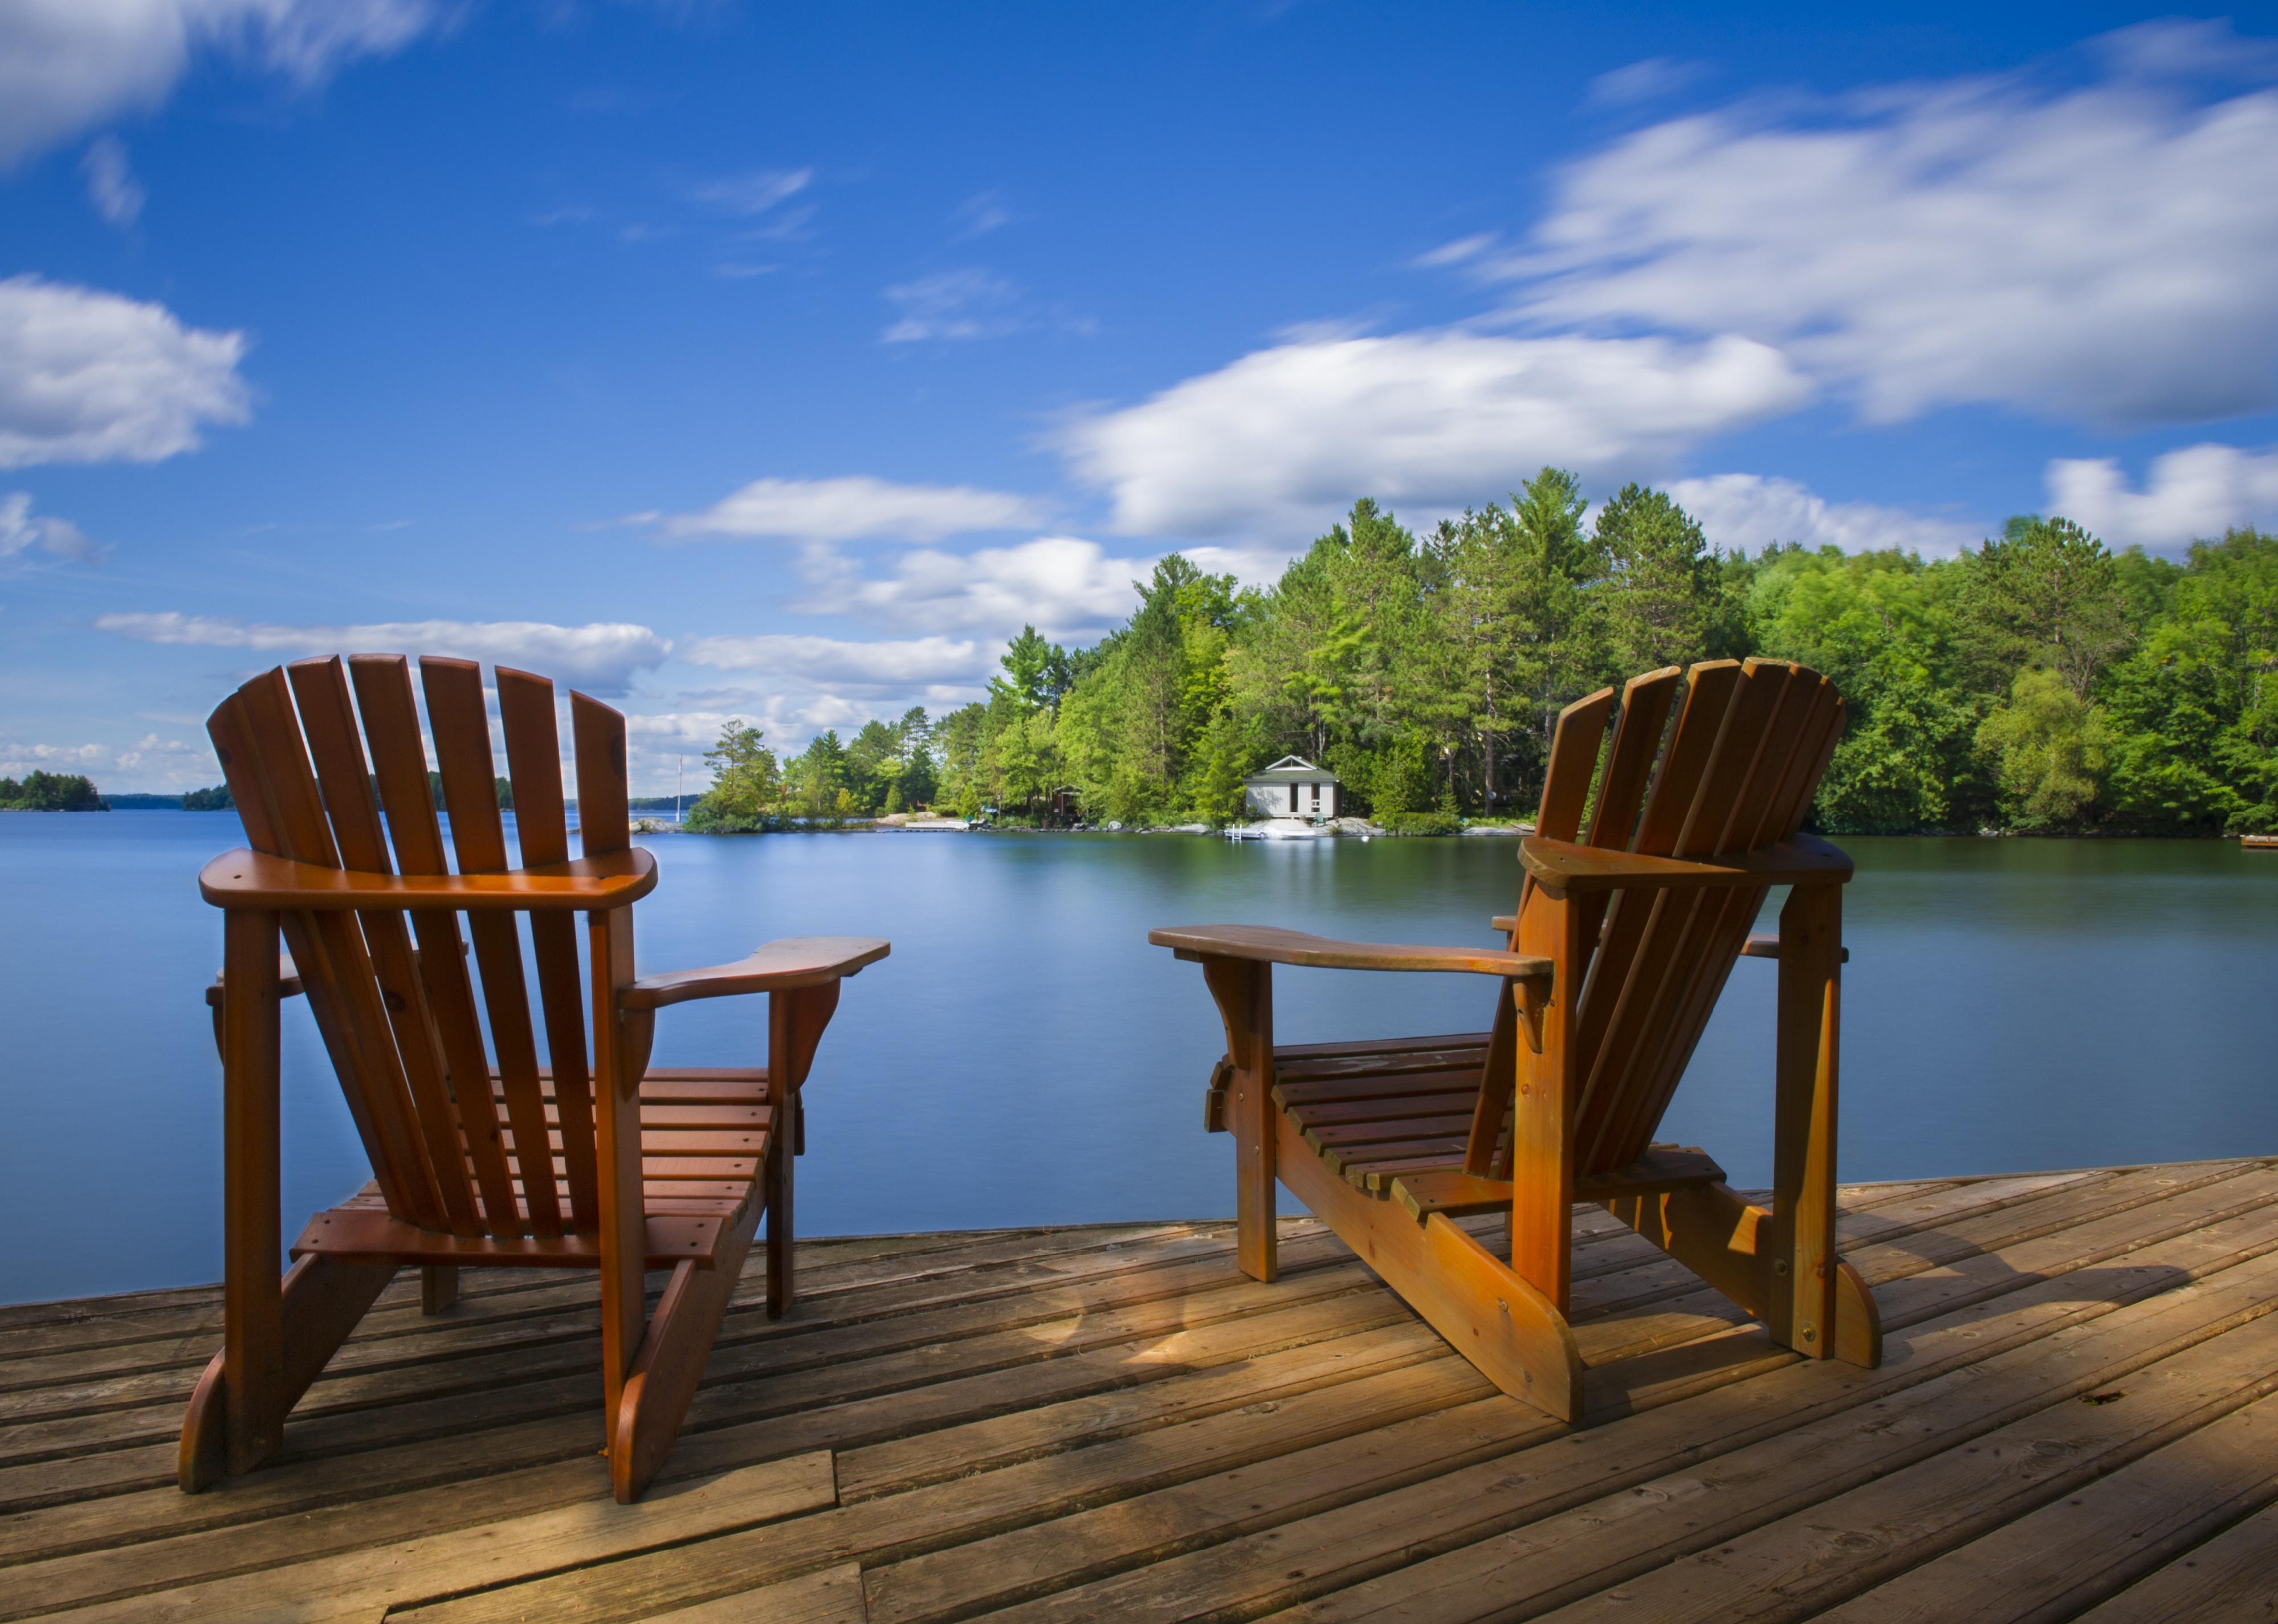 Two Muskoka chairs sitting on a wood dock facing a calm lake.